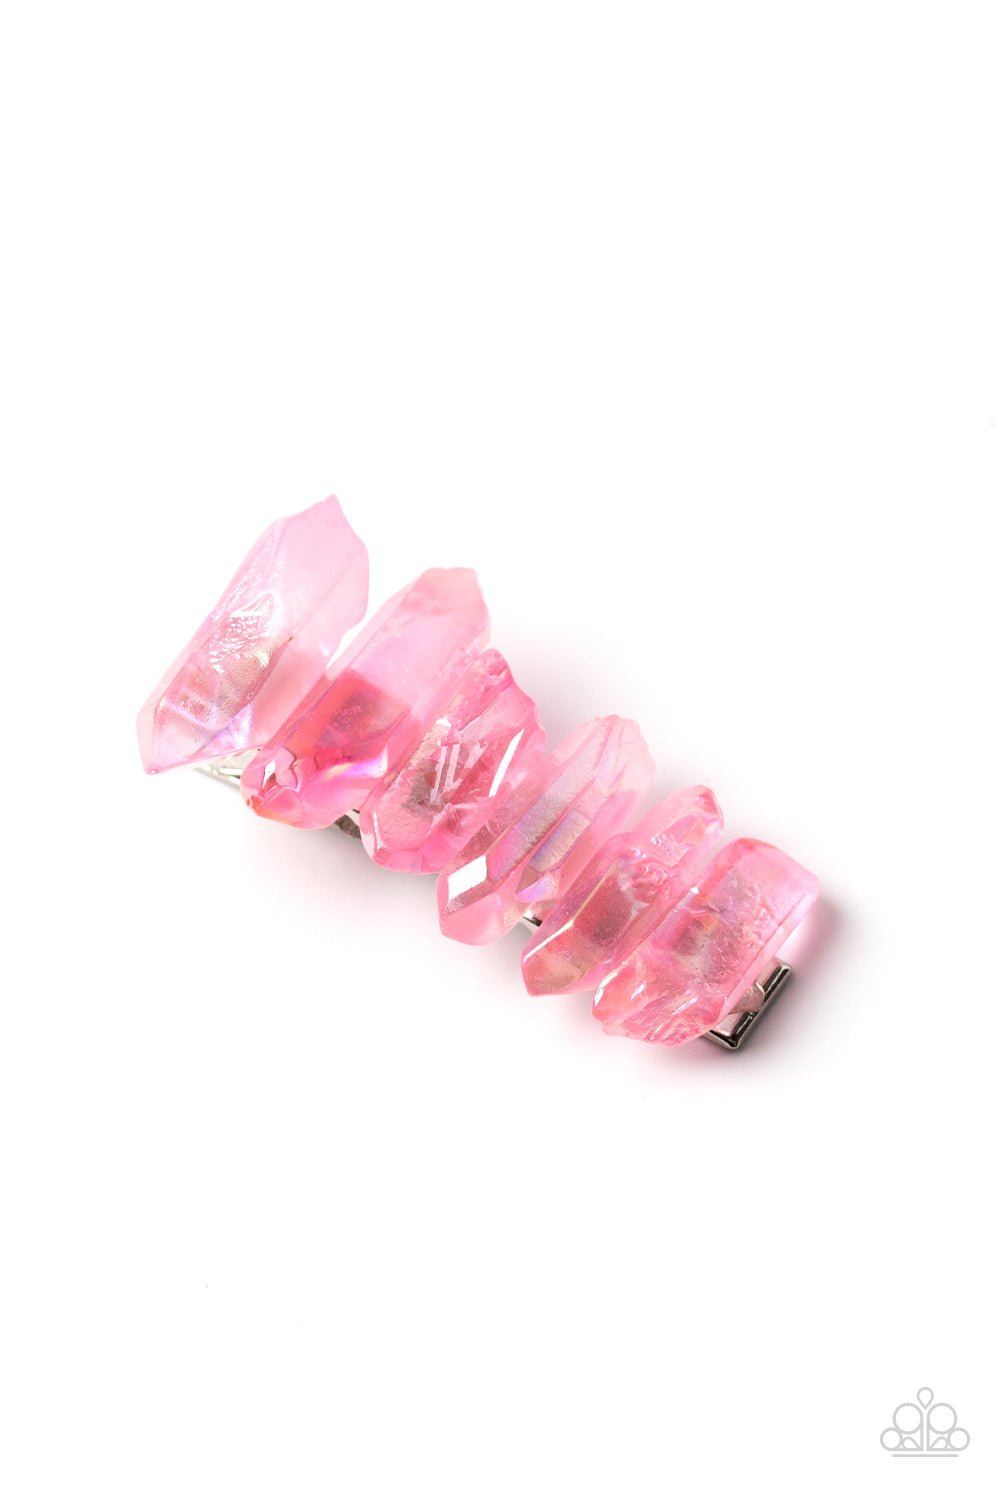 Paparazzi - Crystal Caves - Pink Hair